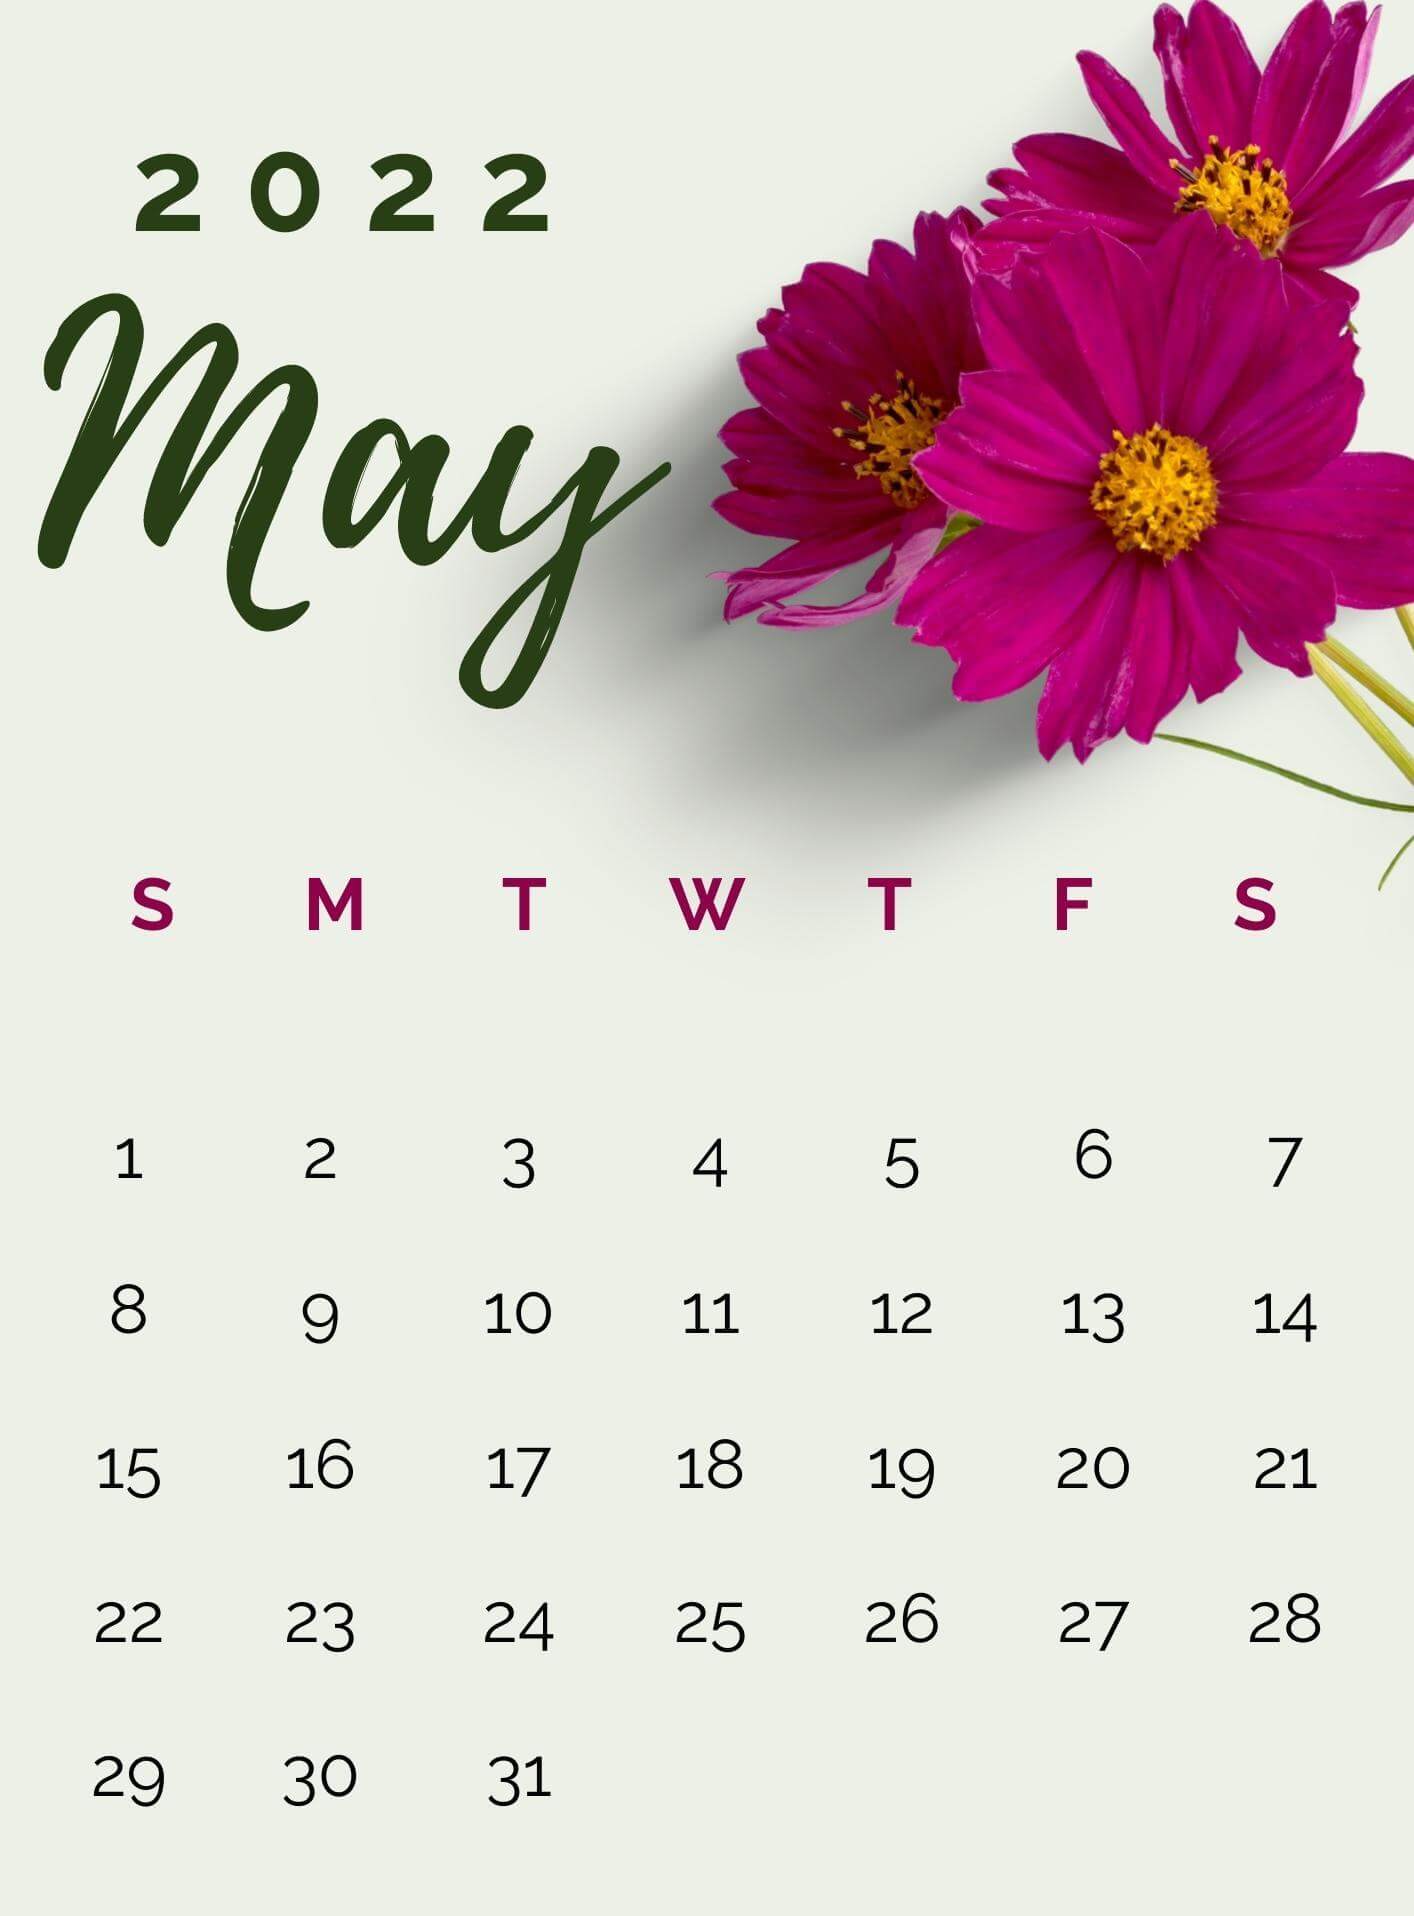 May 2022 Floral Calendar Design